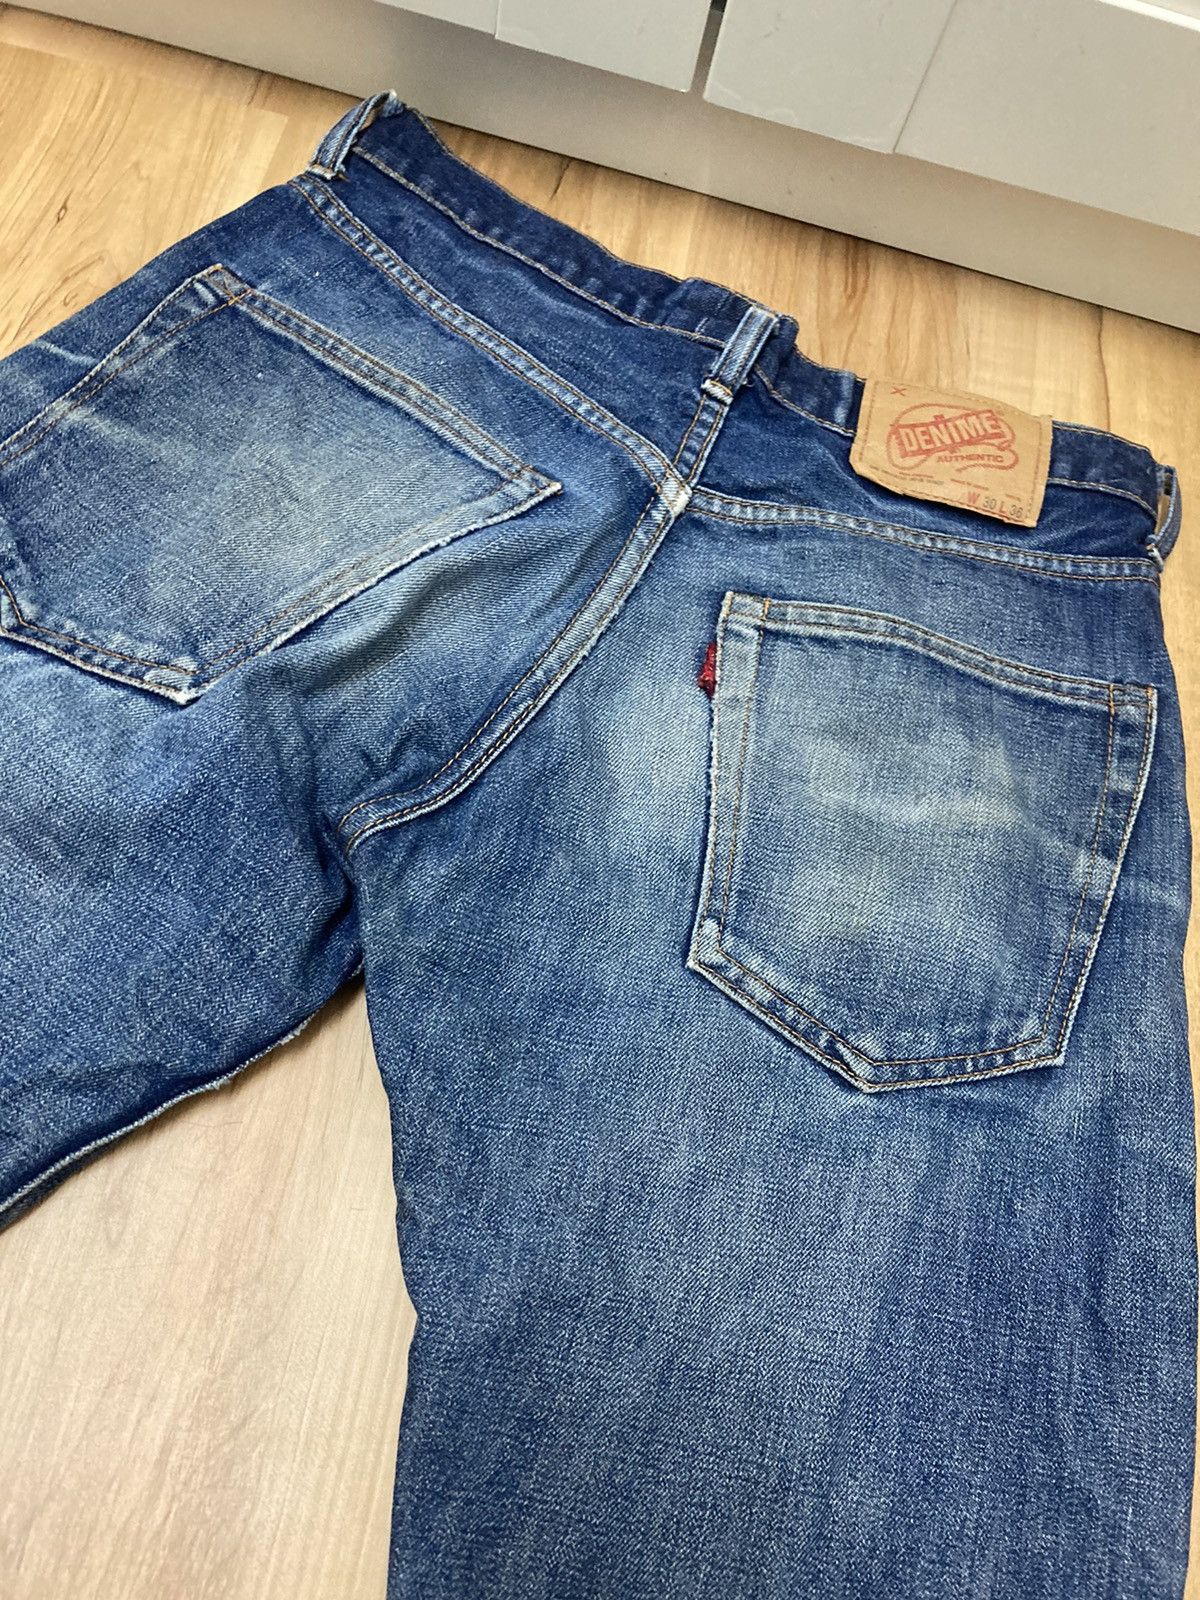 Denime Vintage denime jeans Size US 30 / EU 46 - 9 Thumbnail